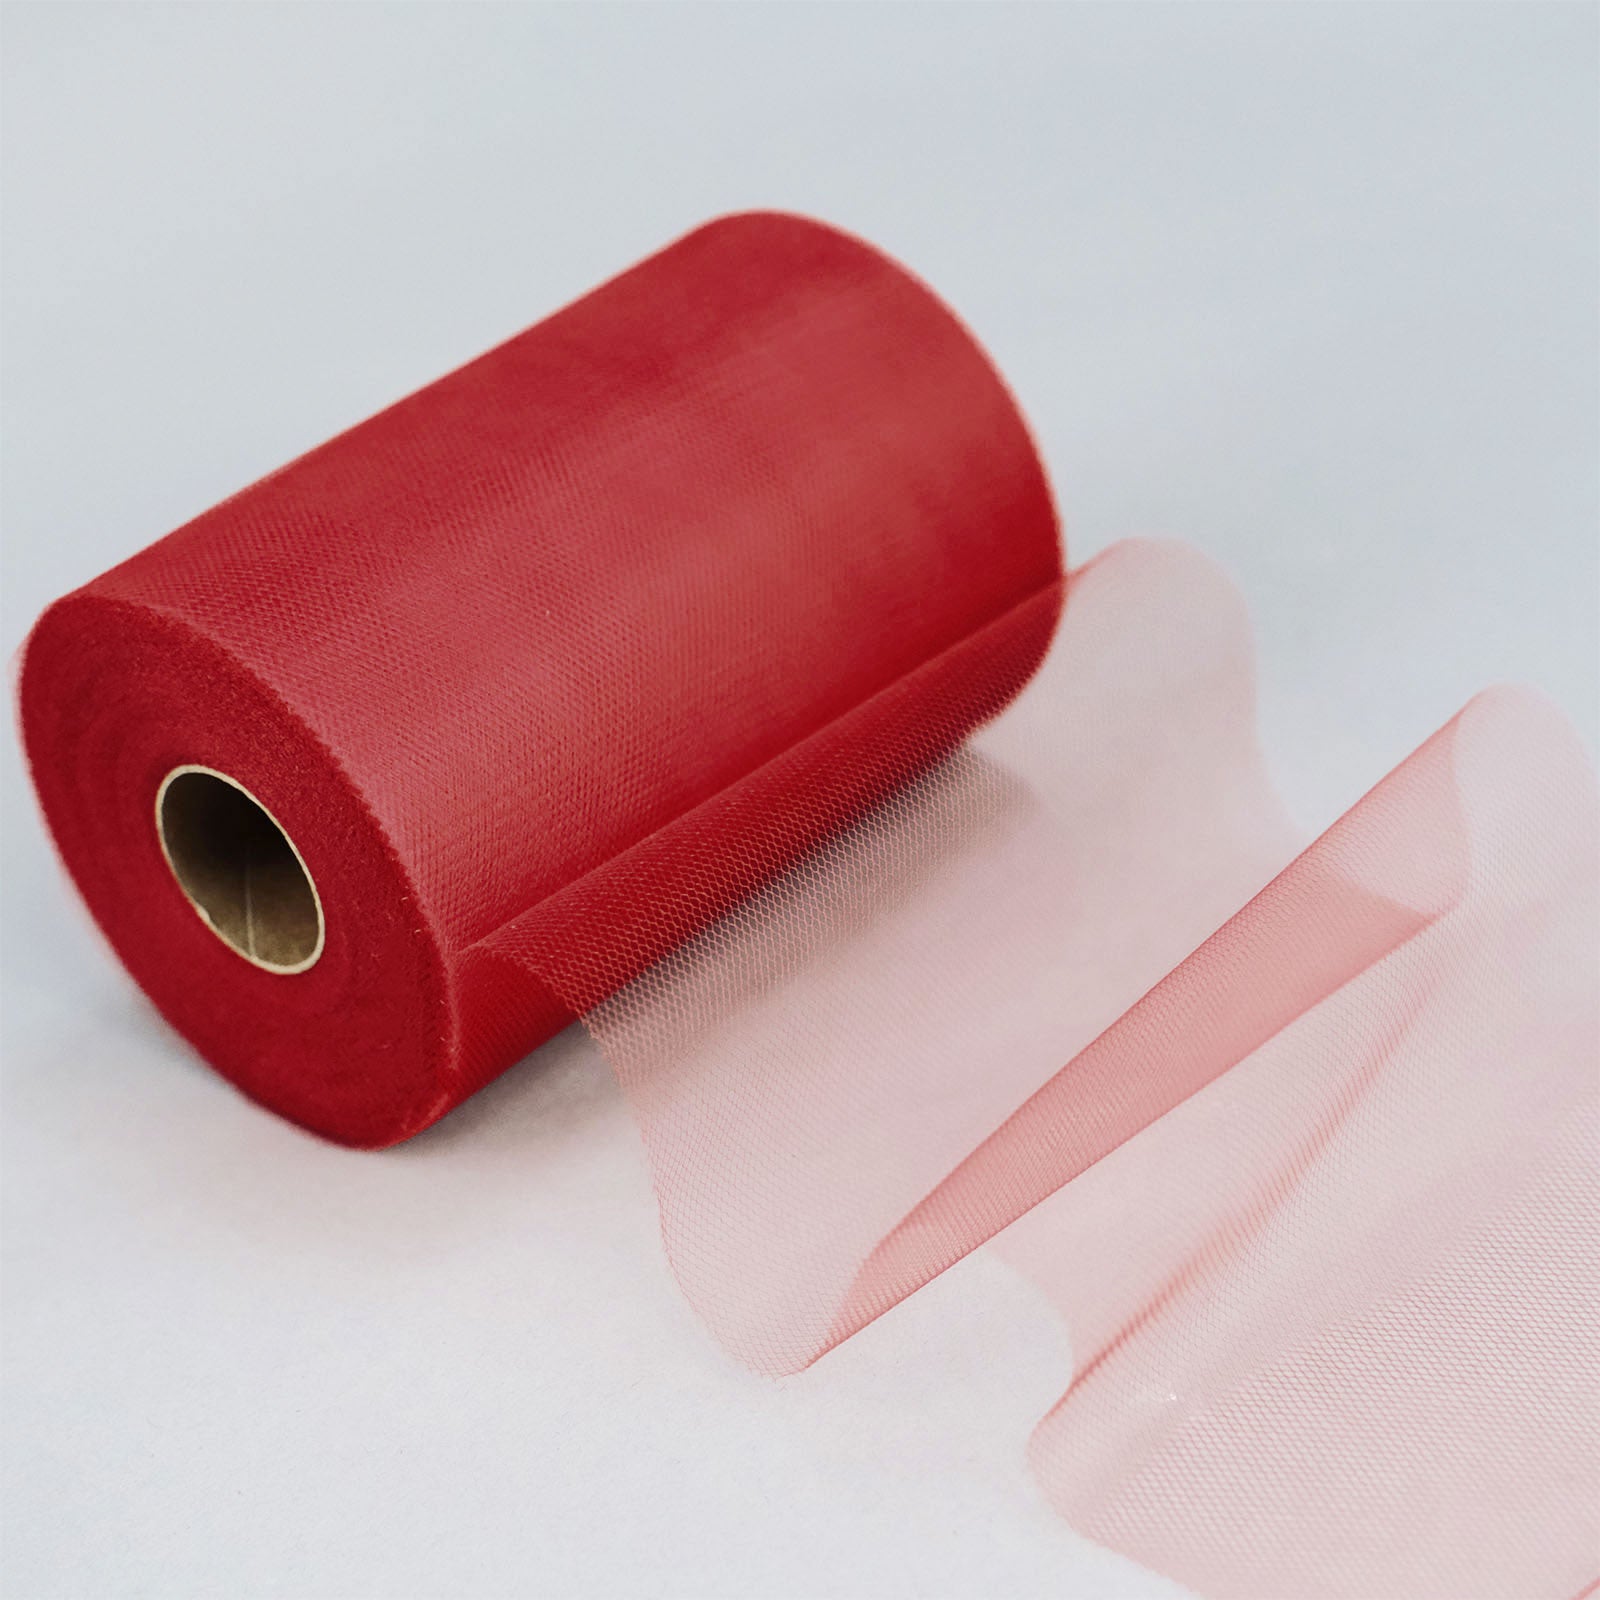 Wholesale Nylon Tulle Fabric Rolls 